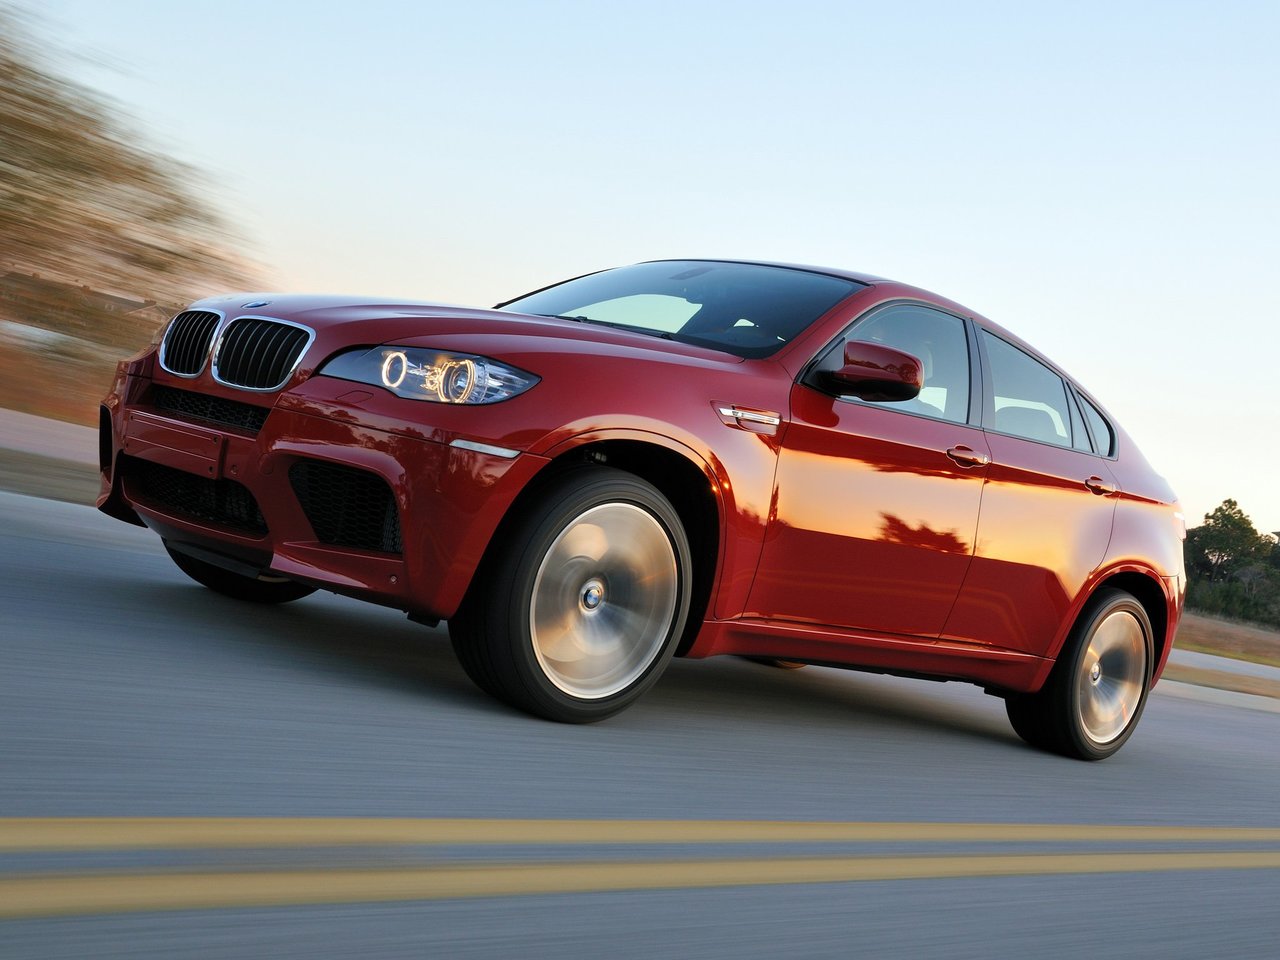 Снижаем расход BMW X6 M на топливо, устанавливаем ГБО